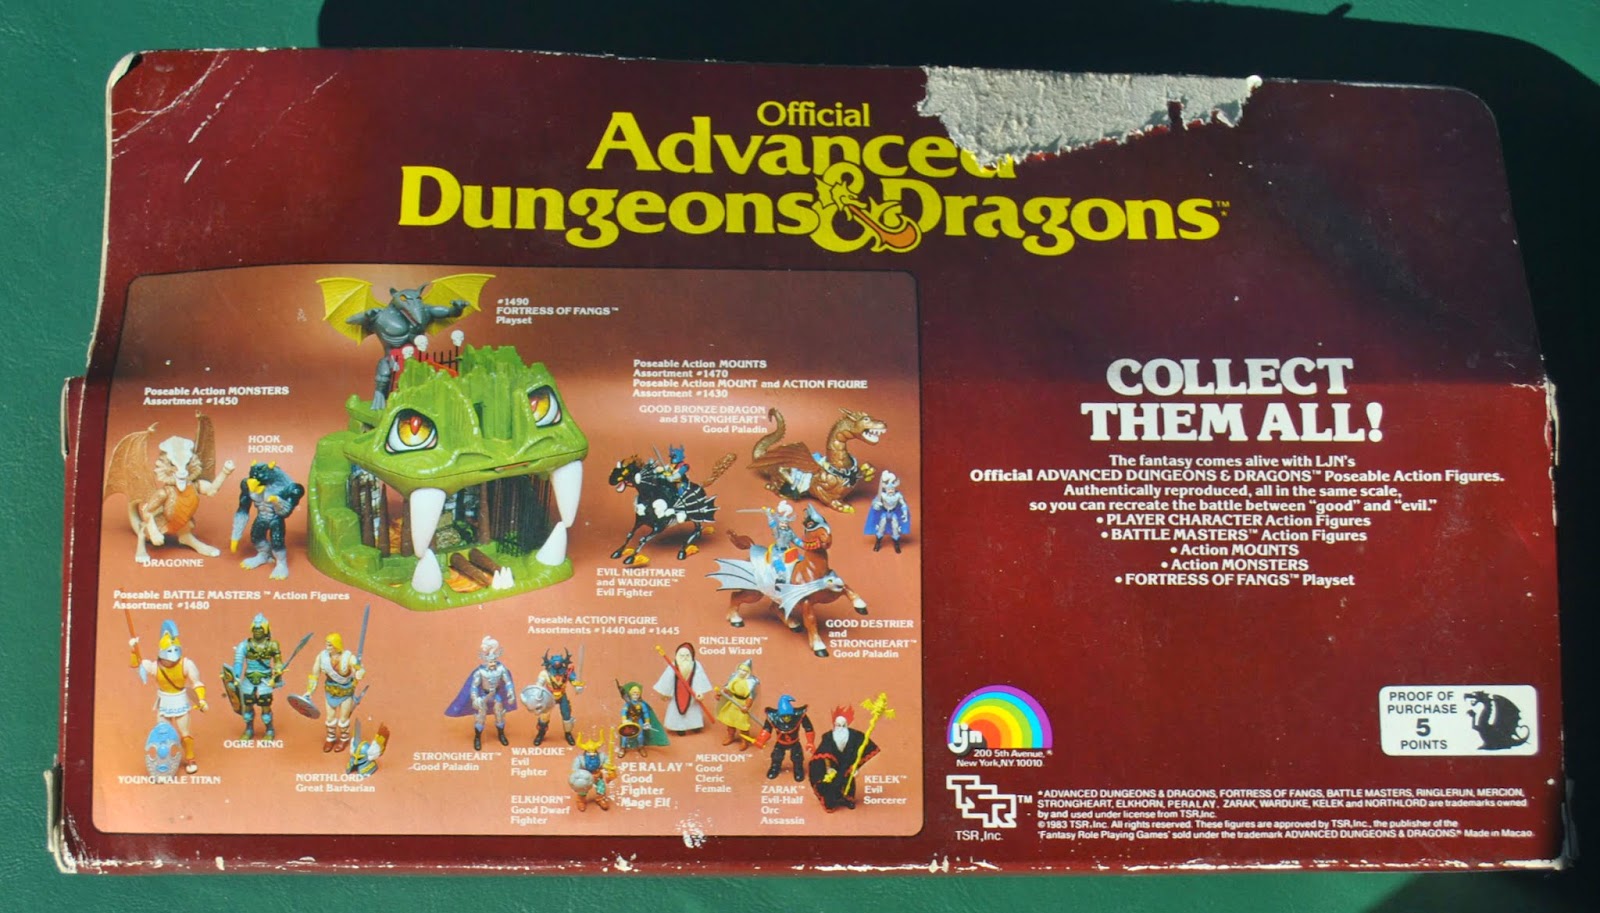 ljn advanced dungeons dragons figures